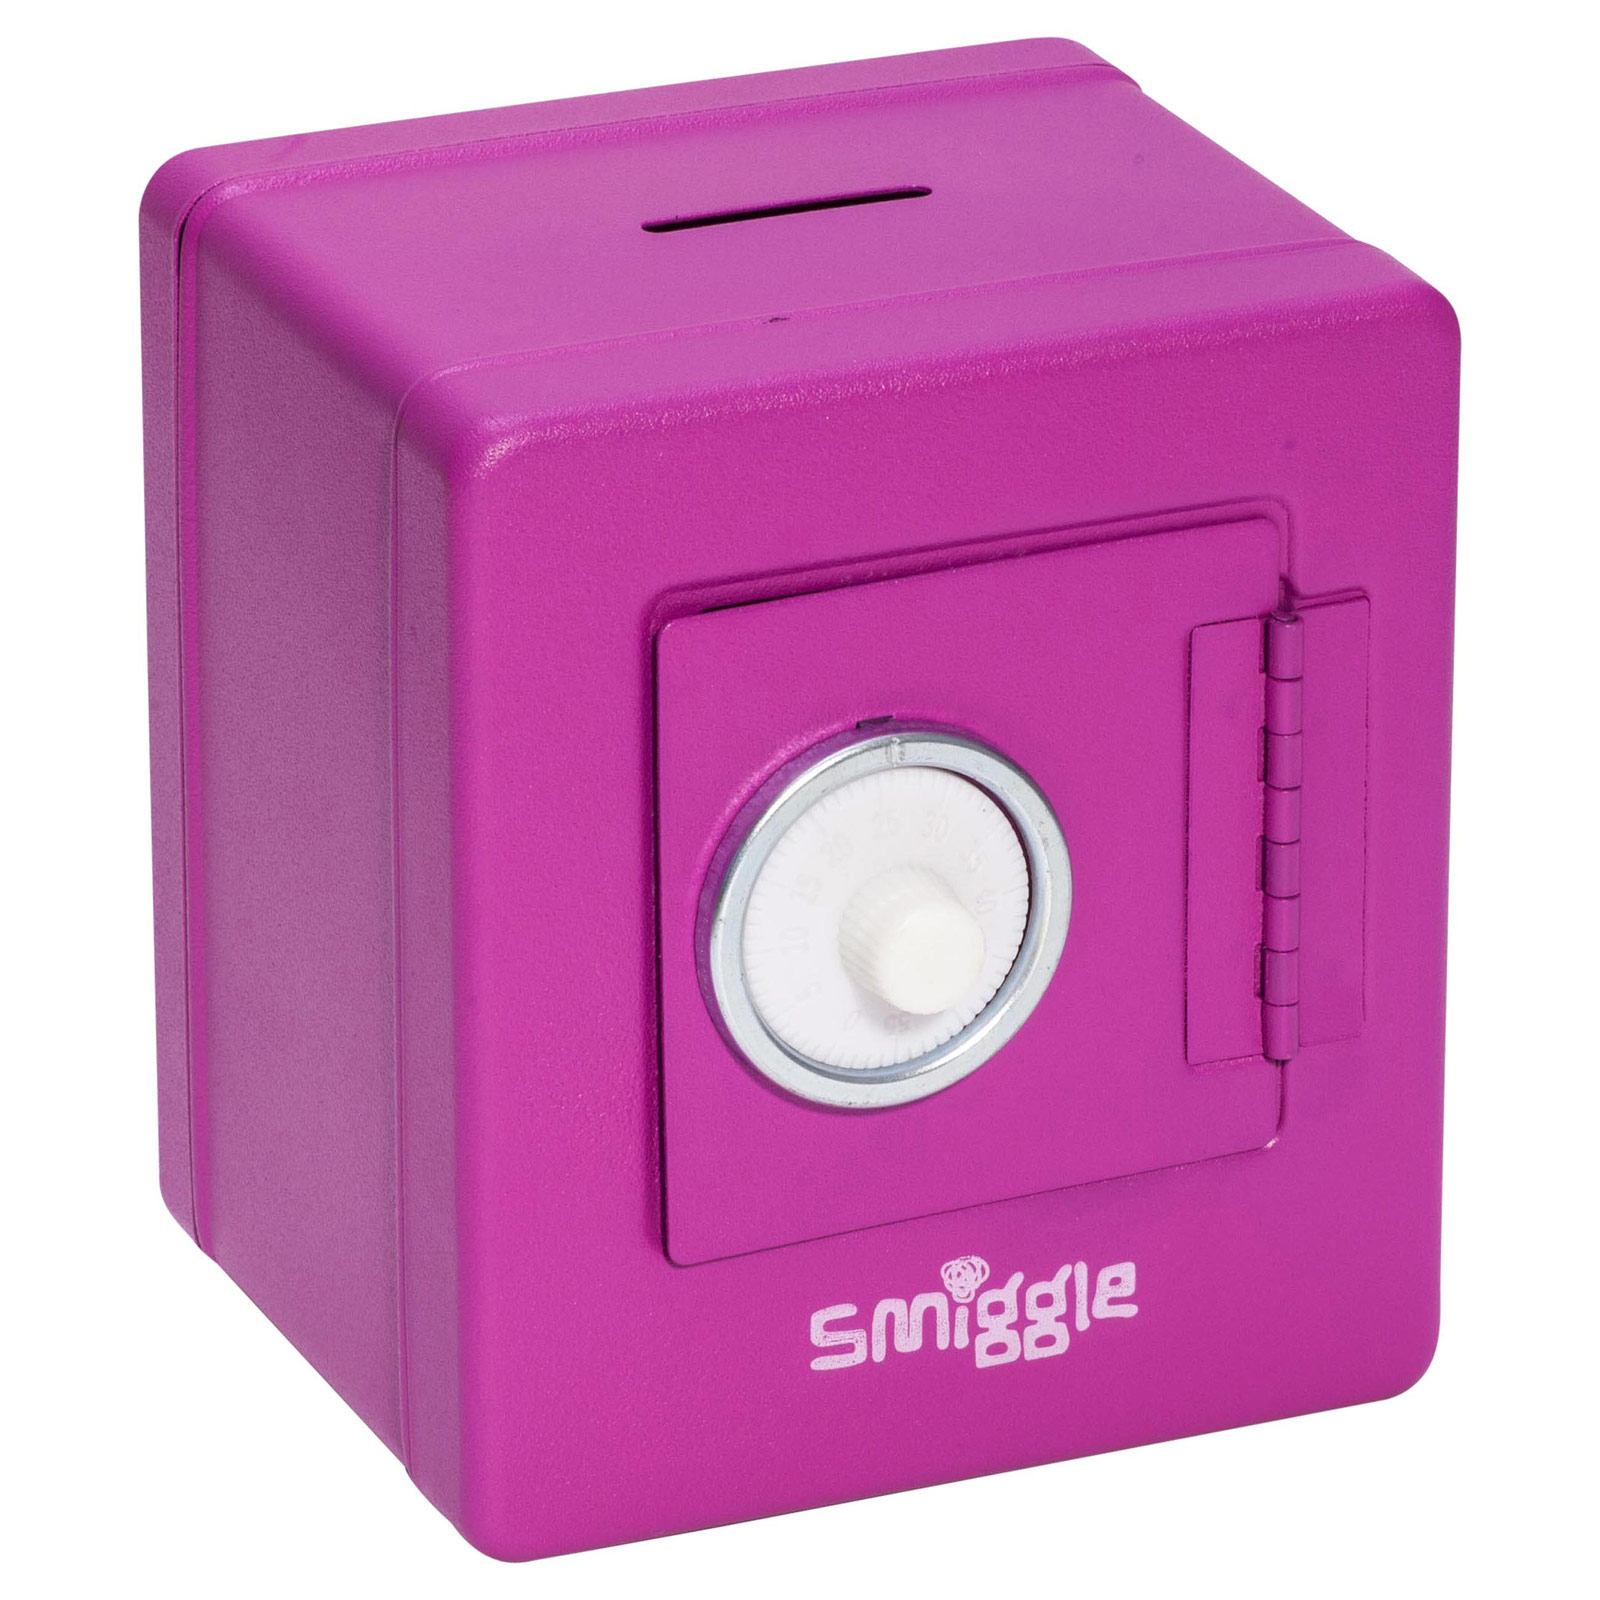 Image for Safe Moneybox Tin from Smiggle UK | Smiggie | Pinterest ...